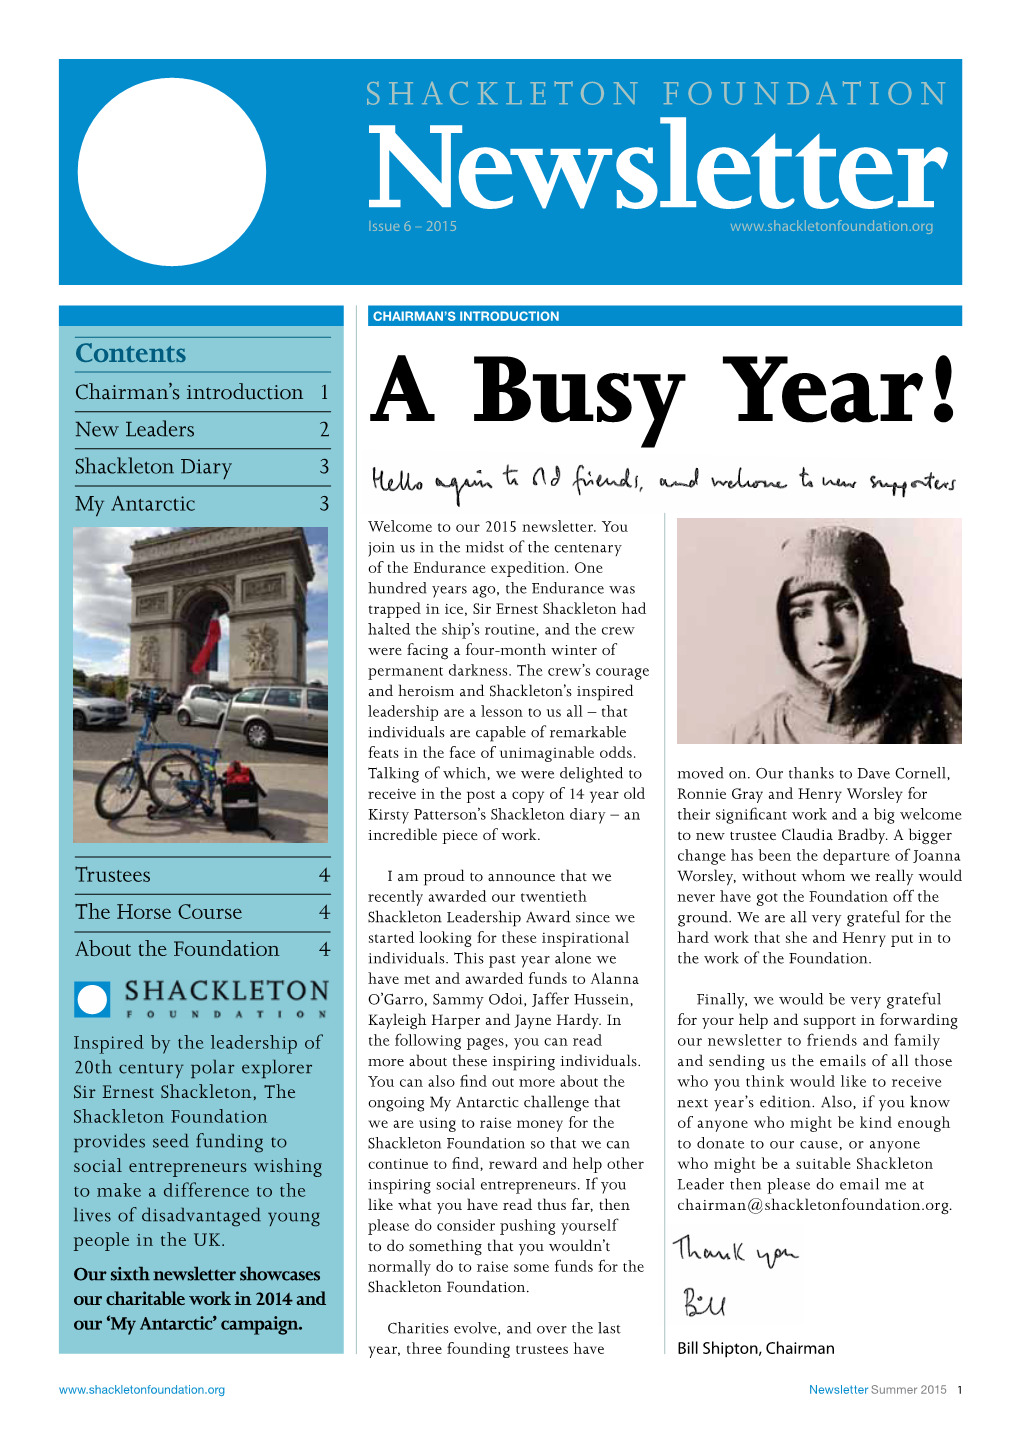 Shackleton Foundation 2015 Newsletter